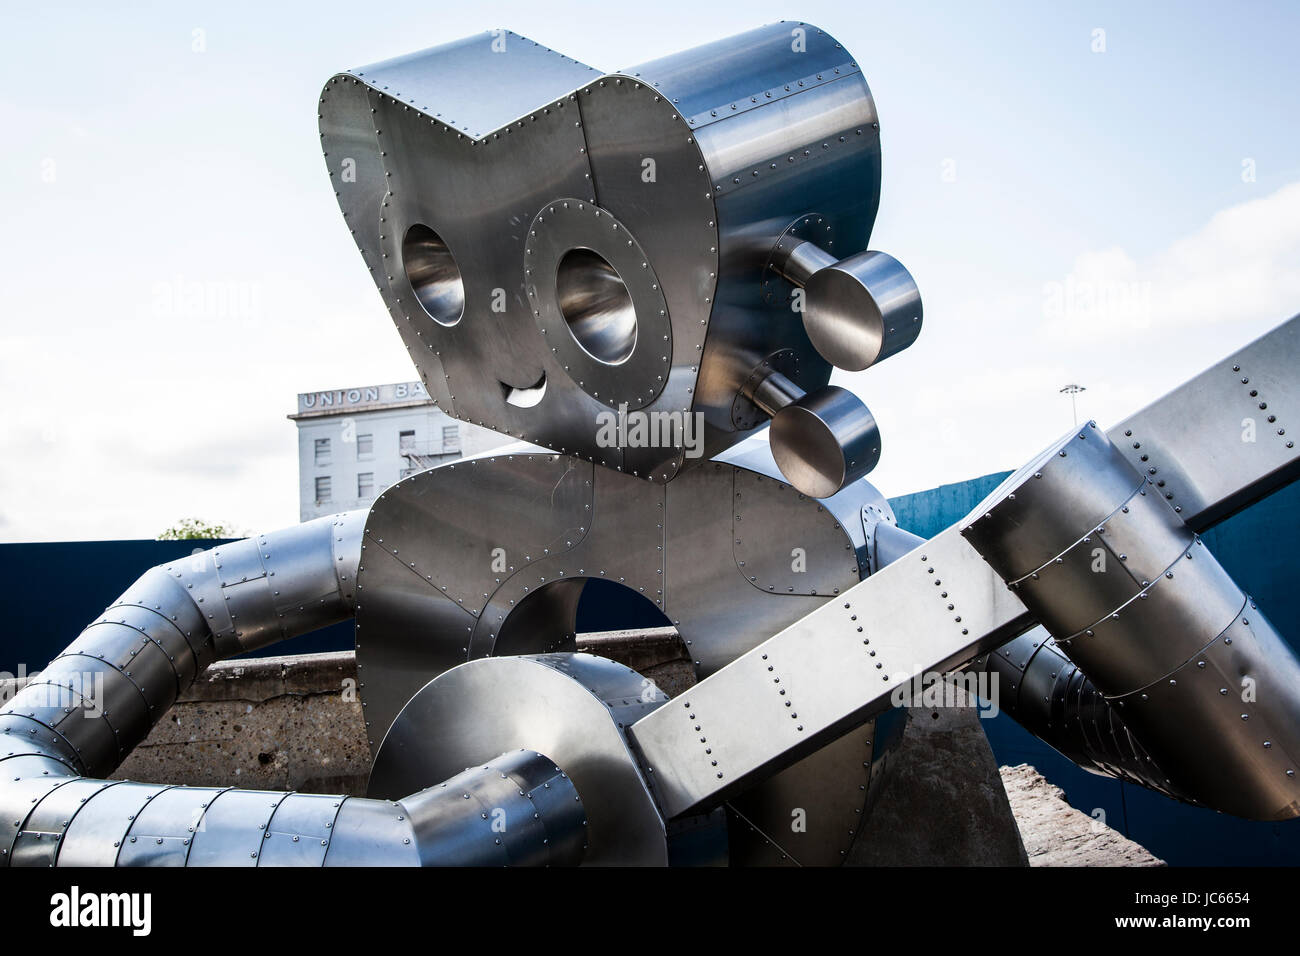 Metal sculpture 'Traveling Man', in the Deep Ellum neighborhood of Dallas, Texas Stock Photo